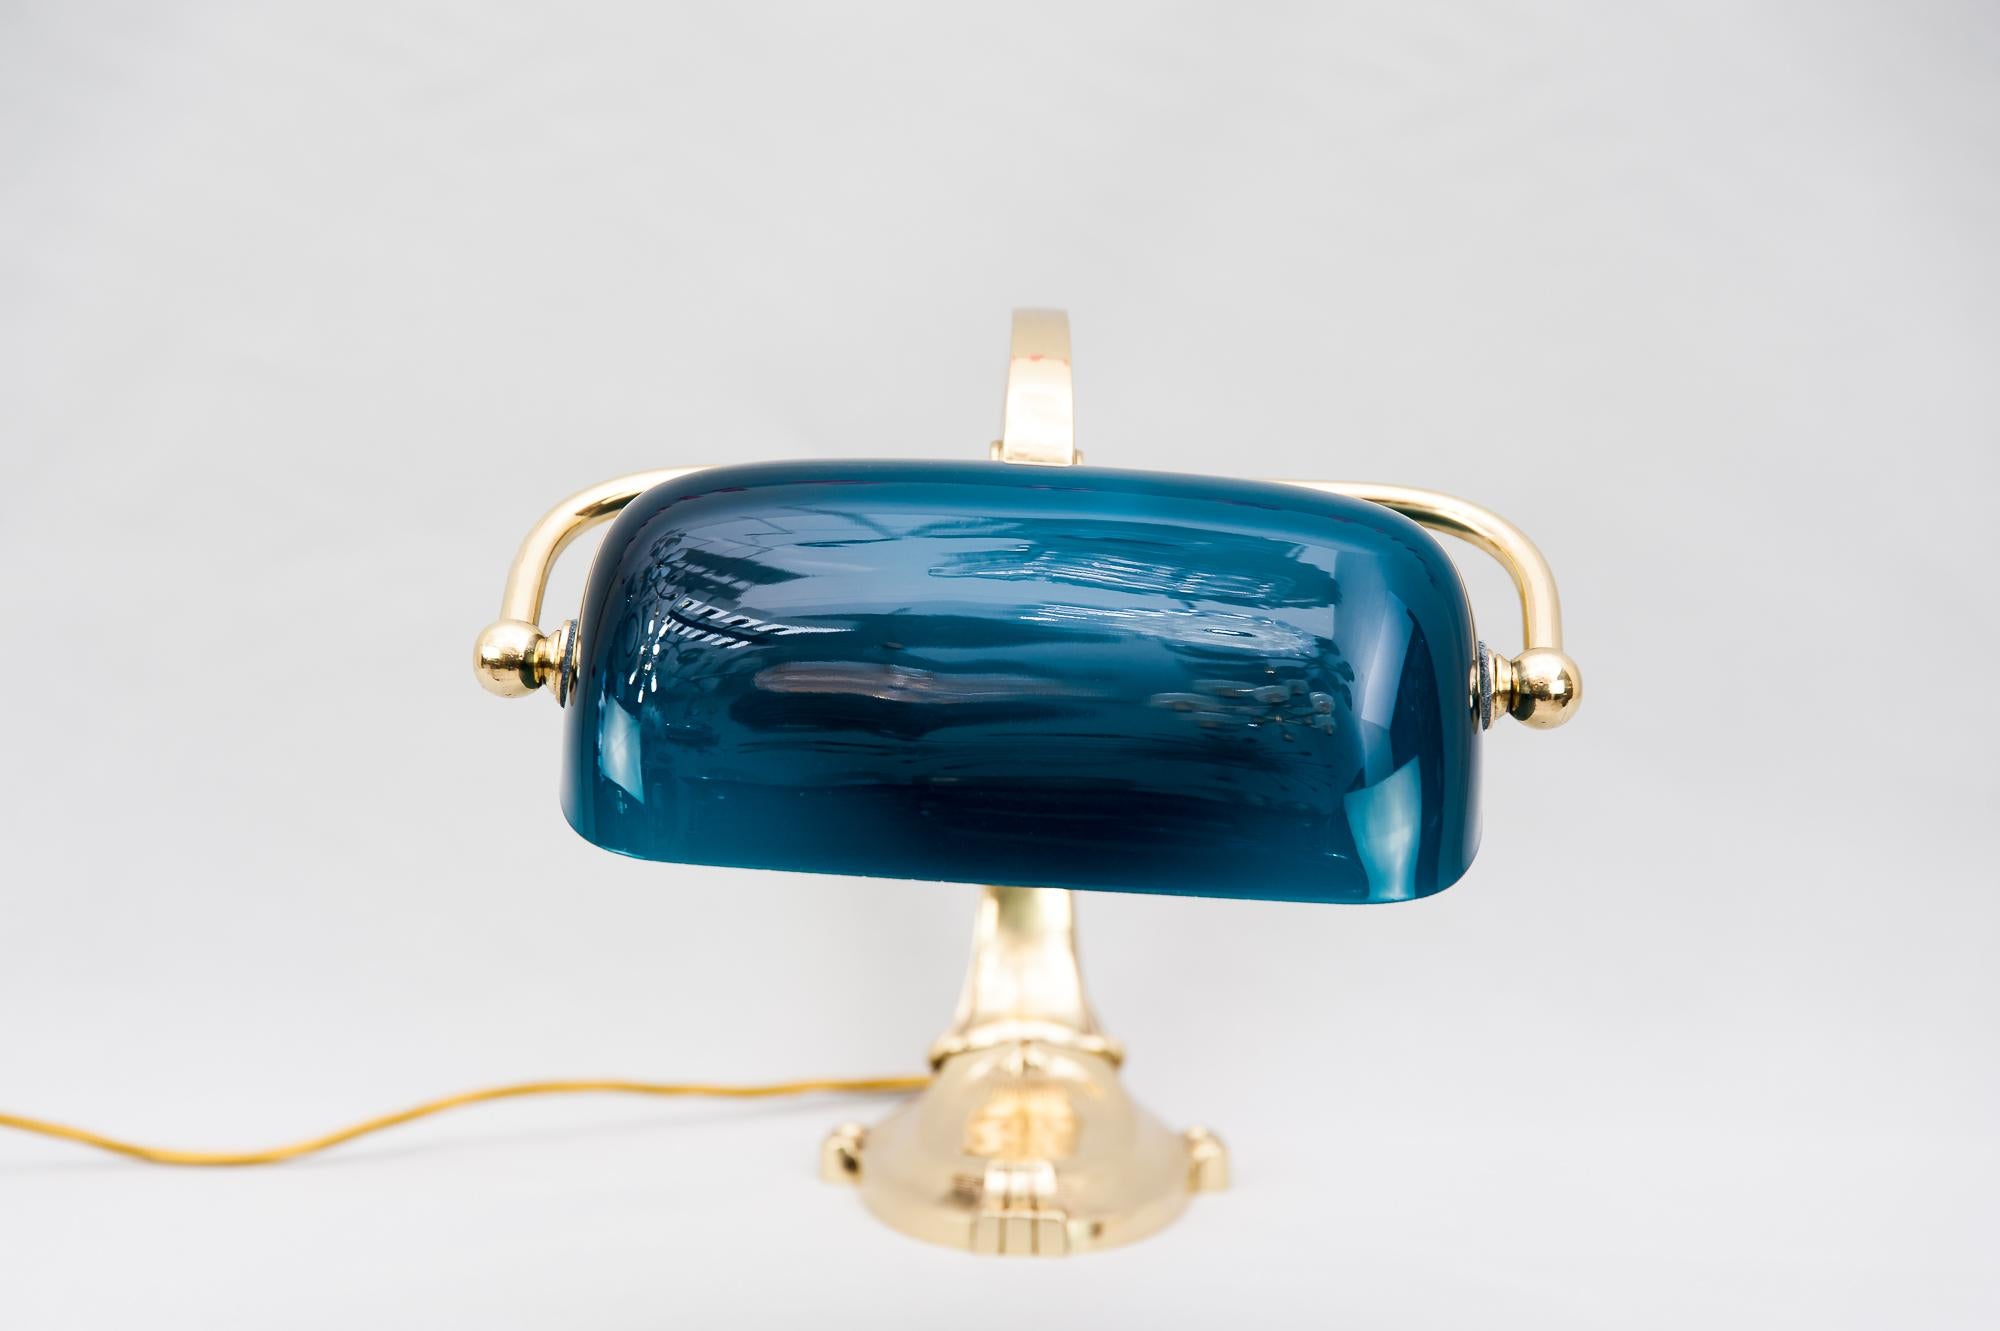 Brass Art Deco Table Lamp or Piano Lamp, circa 1920s